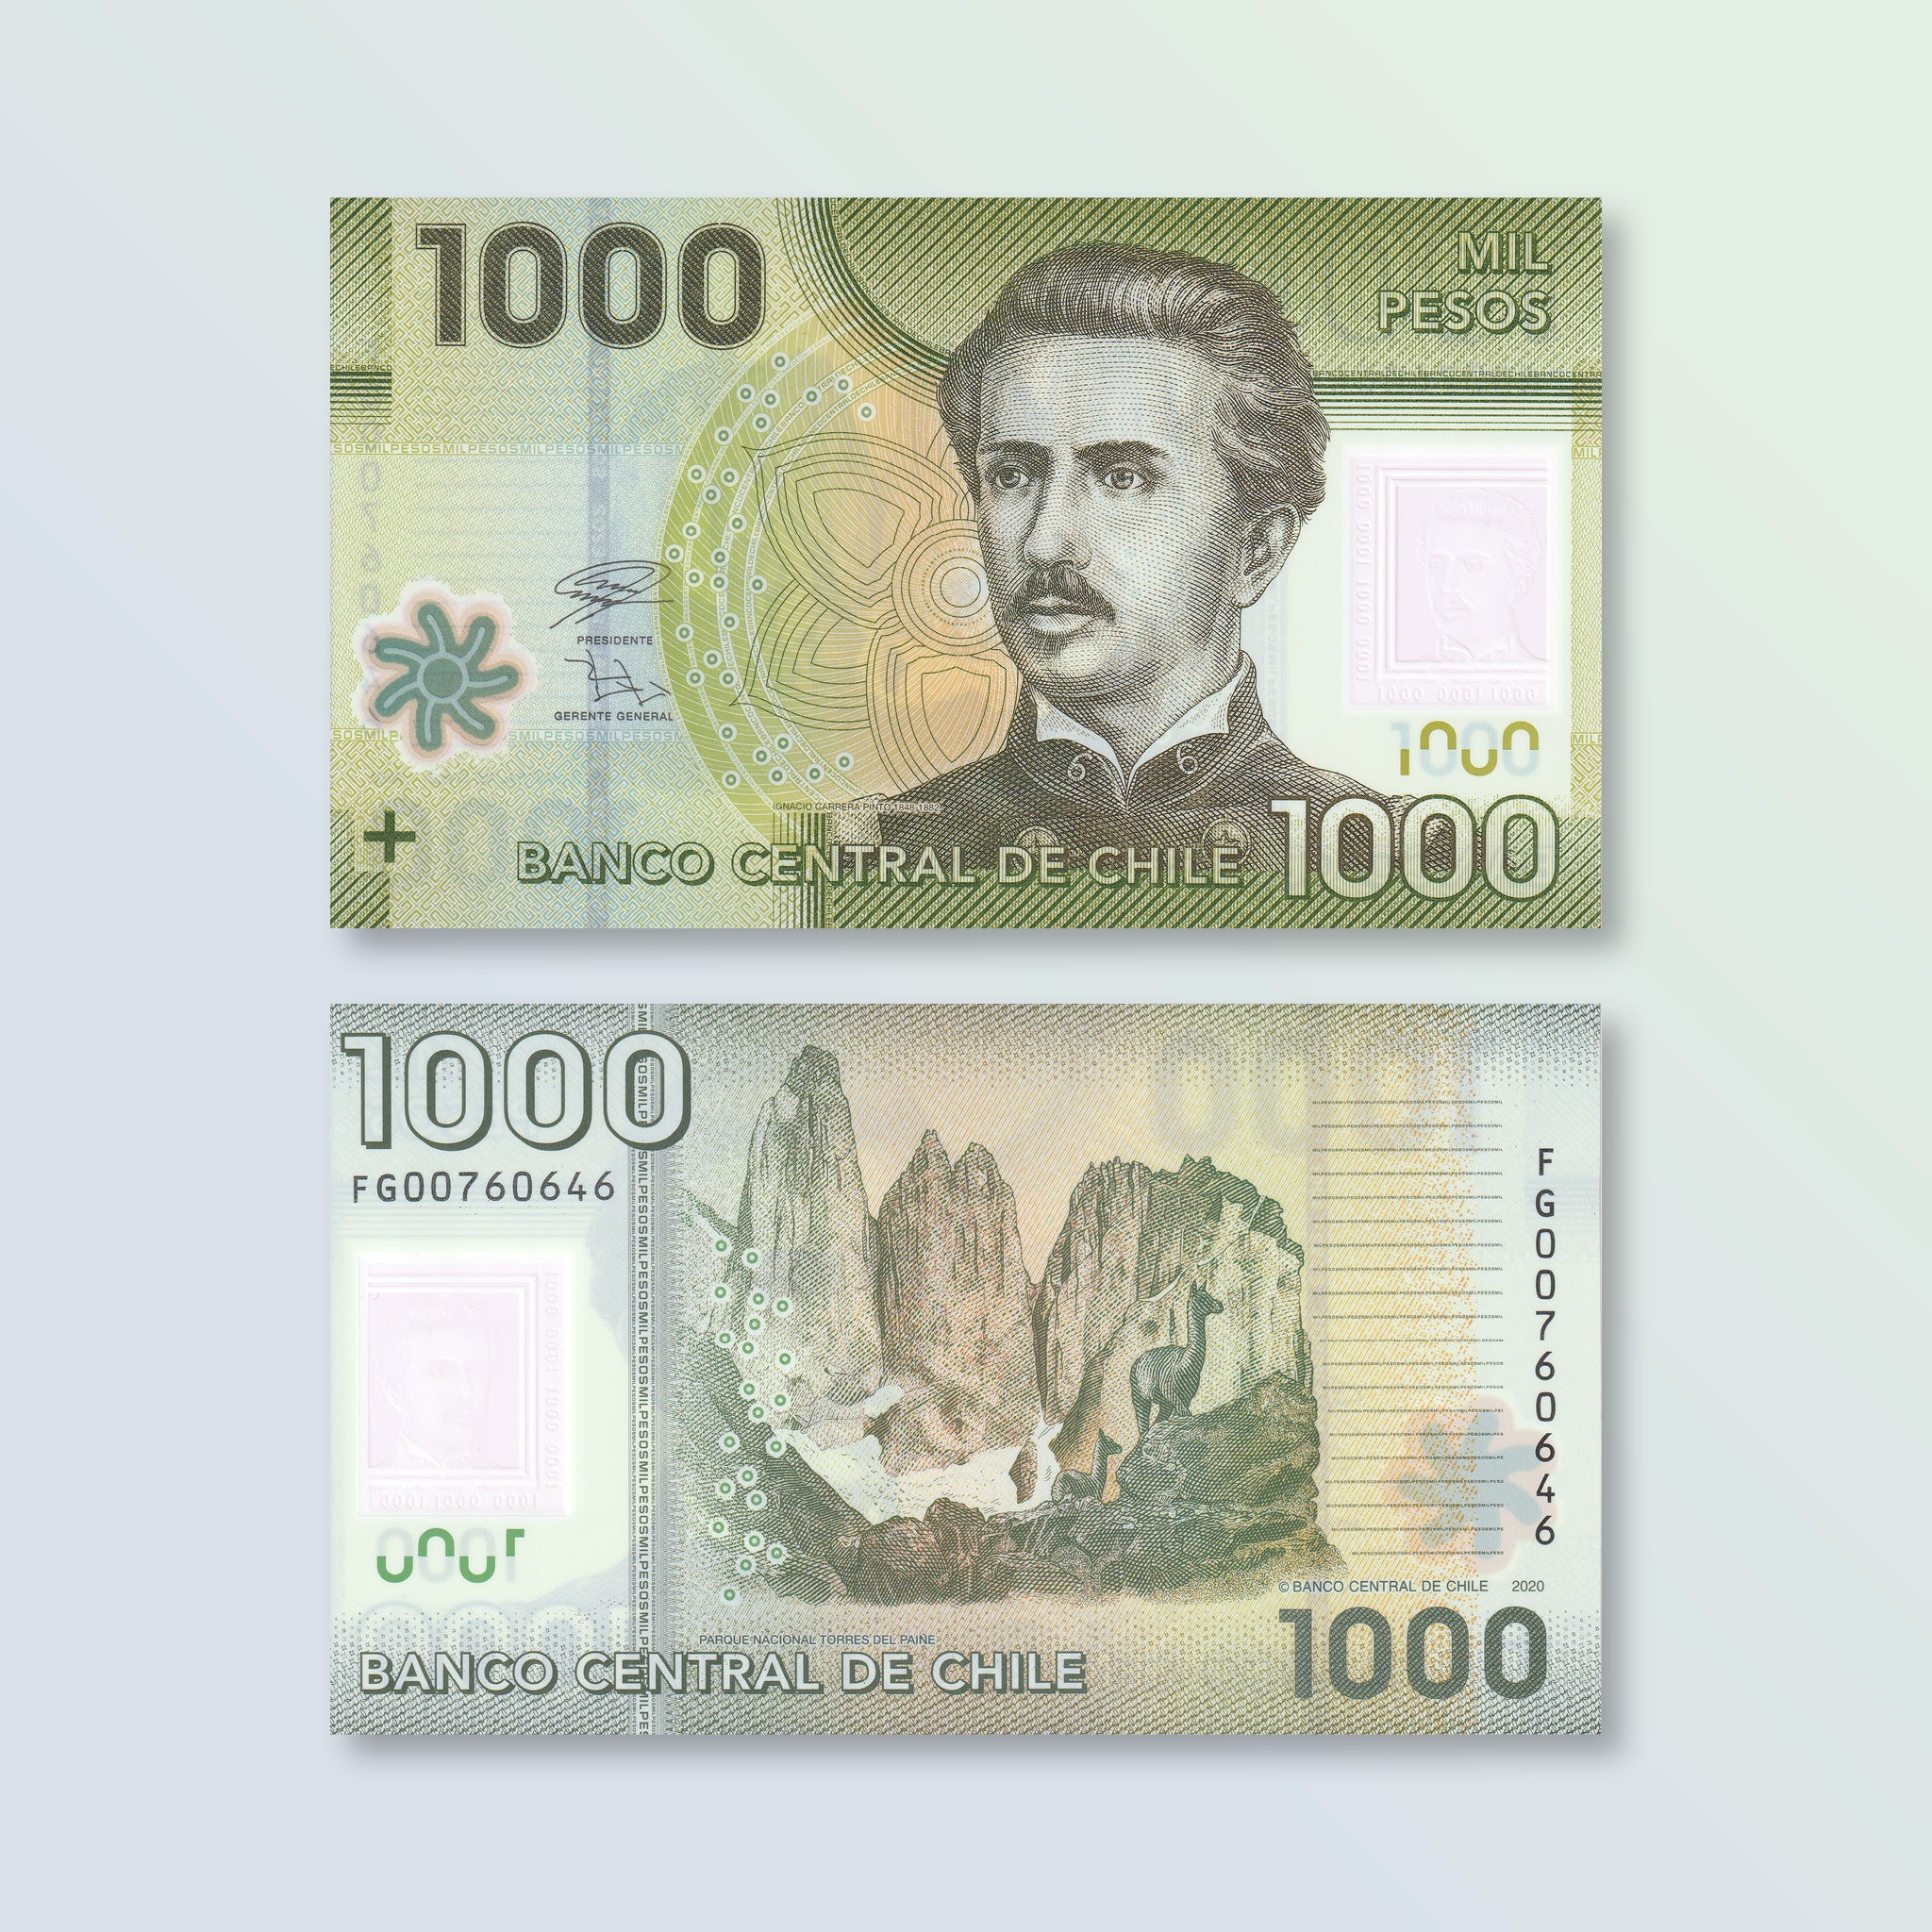 Chile 1000 Pesos, 2020, B296k, P161, UNC - Robert's World Money - World Banknotes